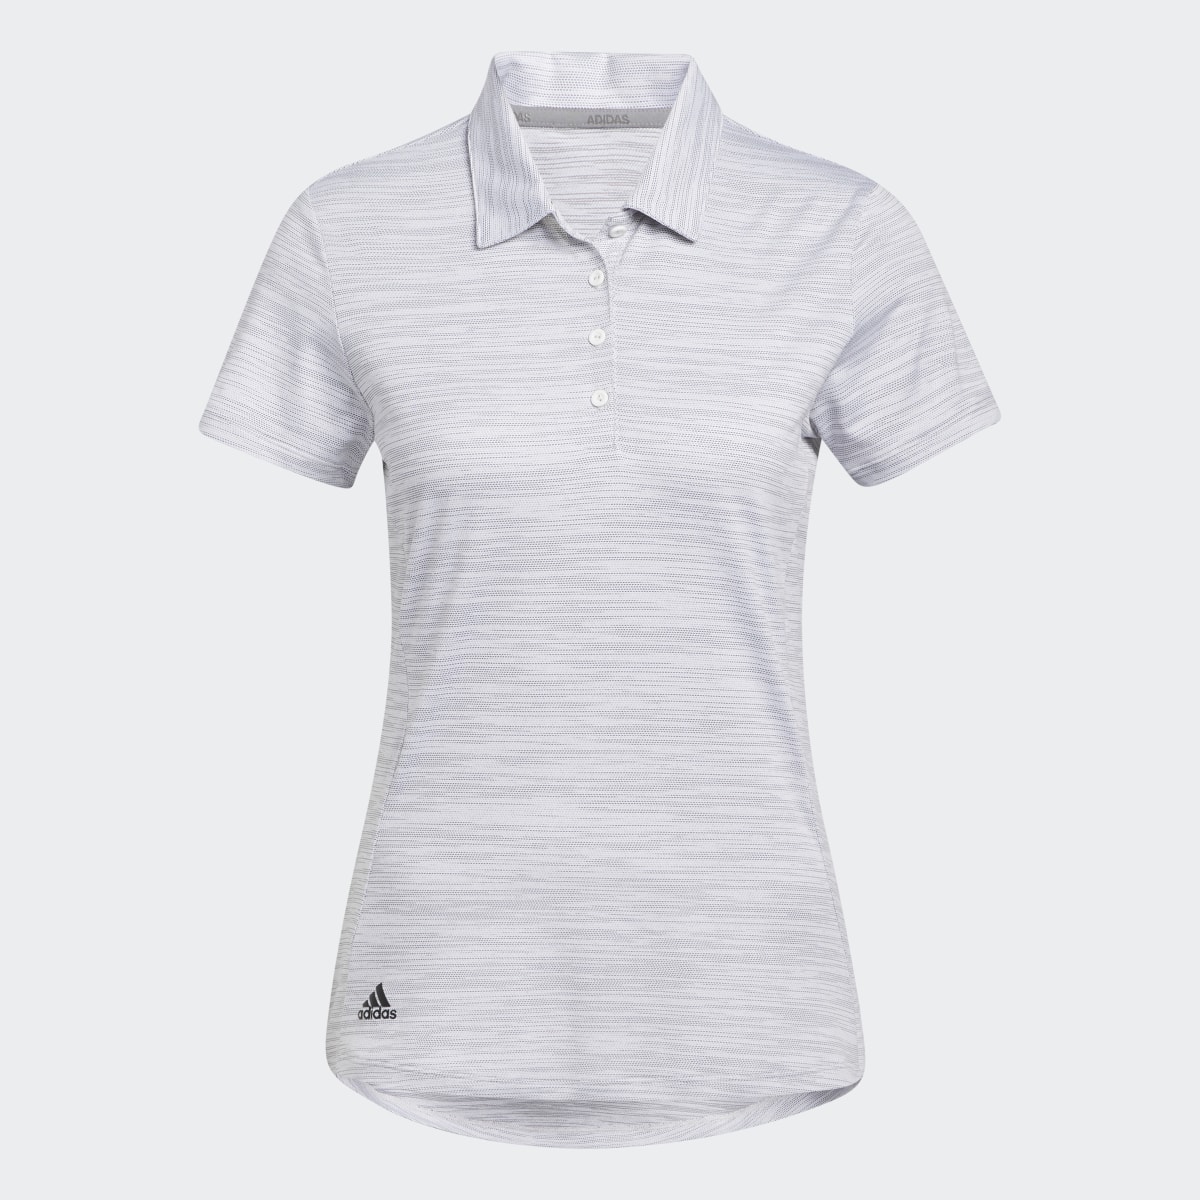 Adidas Space-Dyed Short Sleeve Golf Polo Shirt. 5